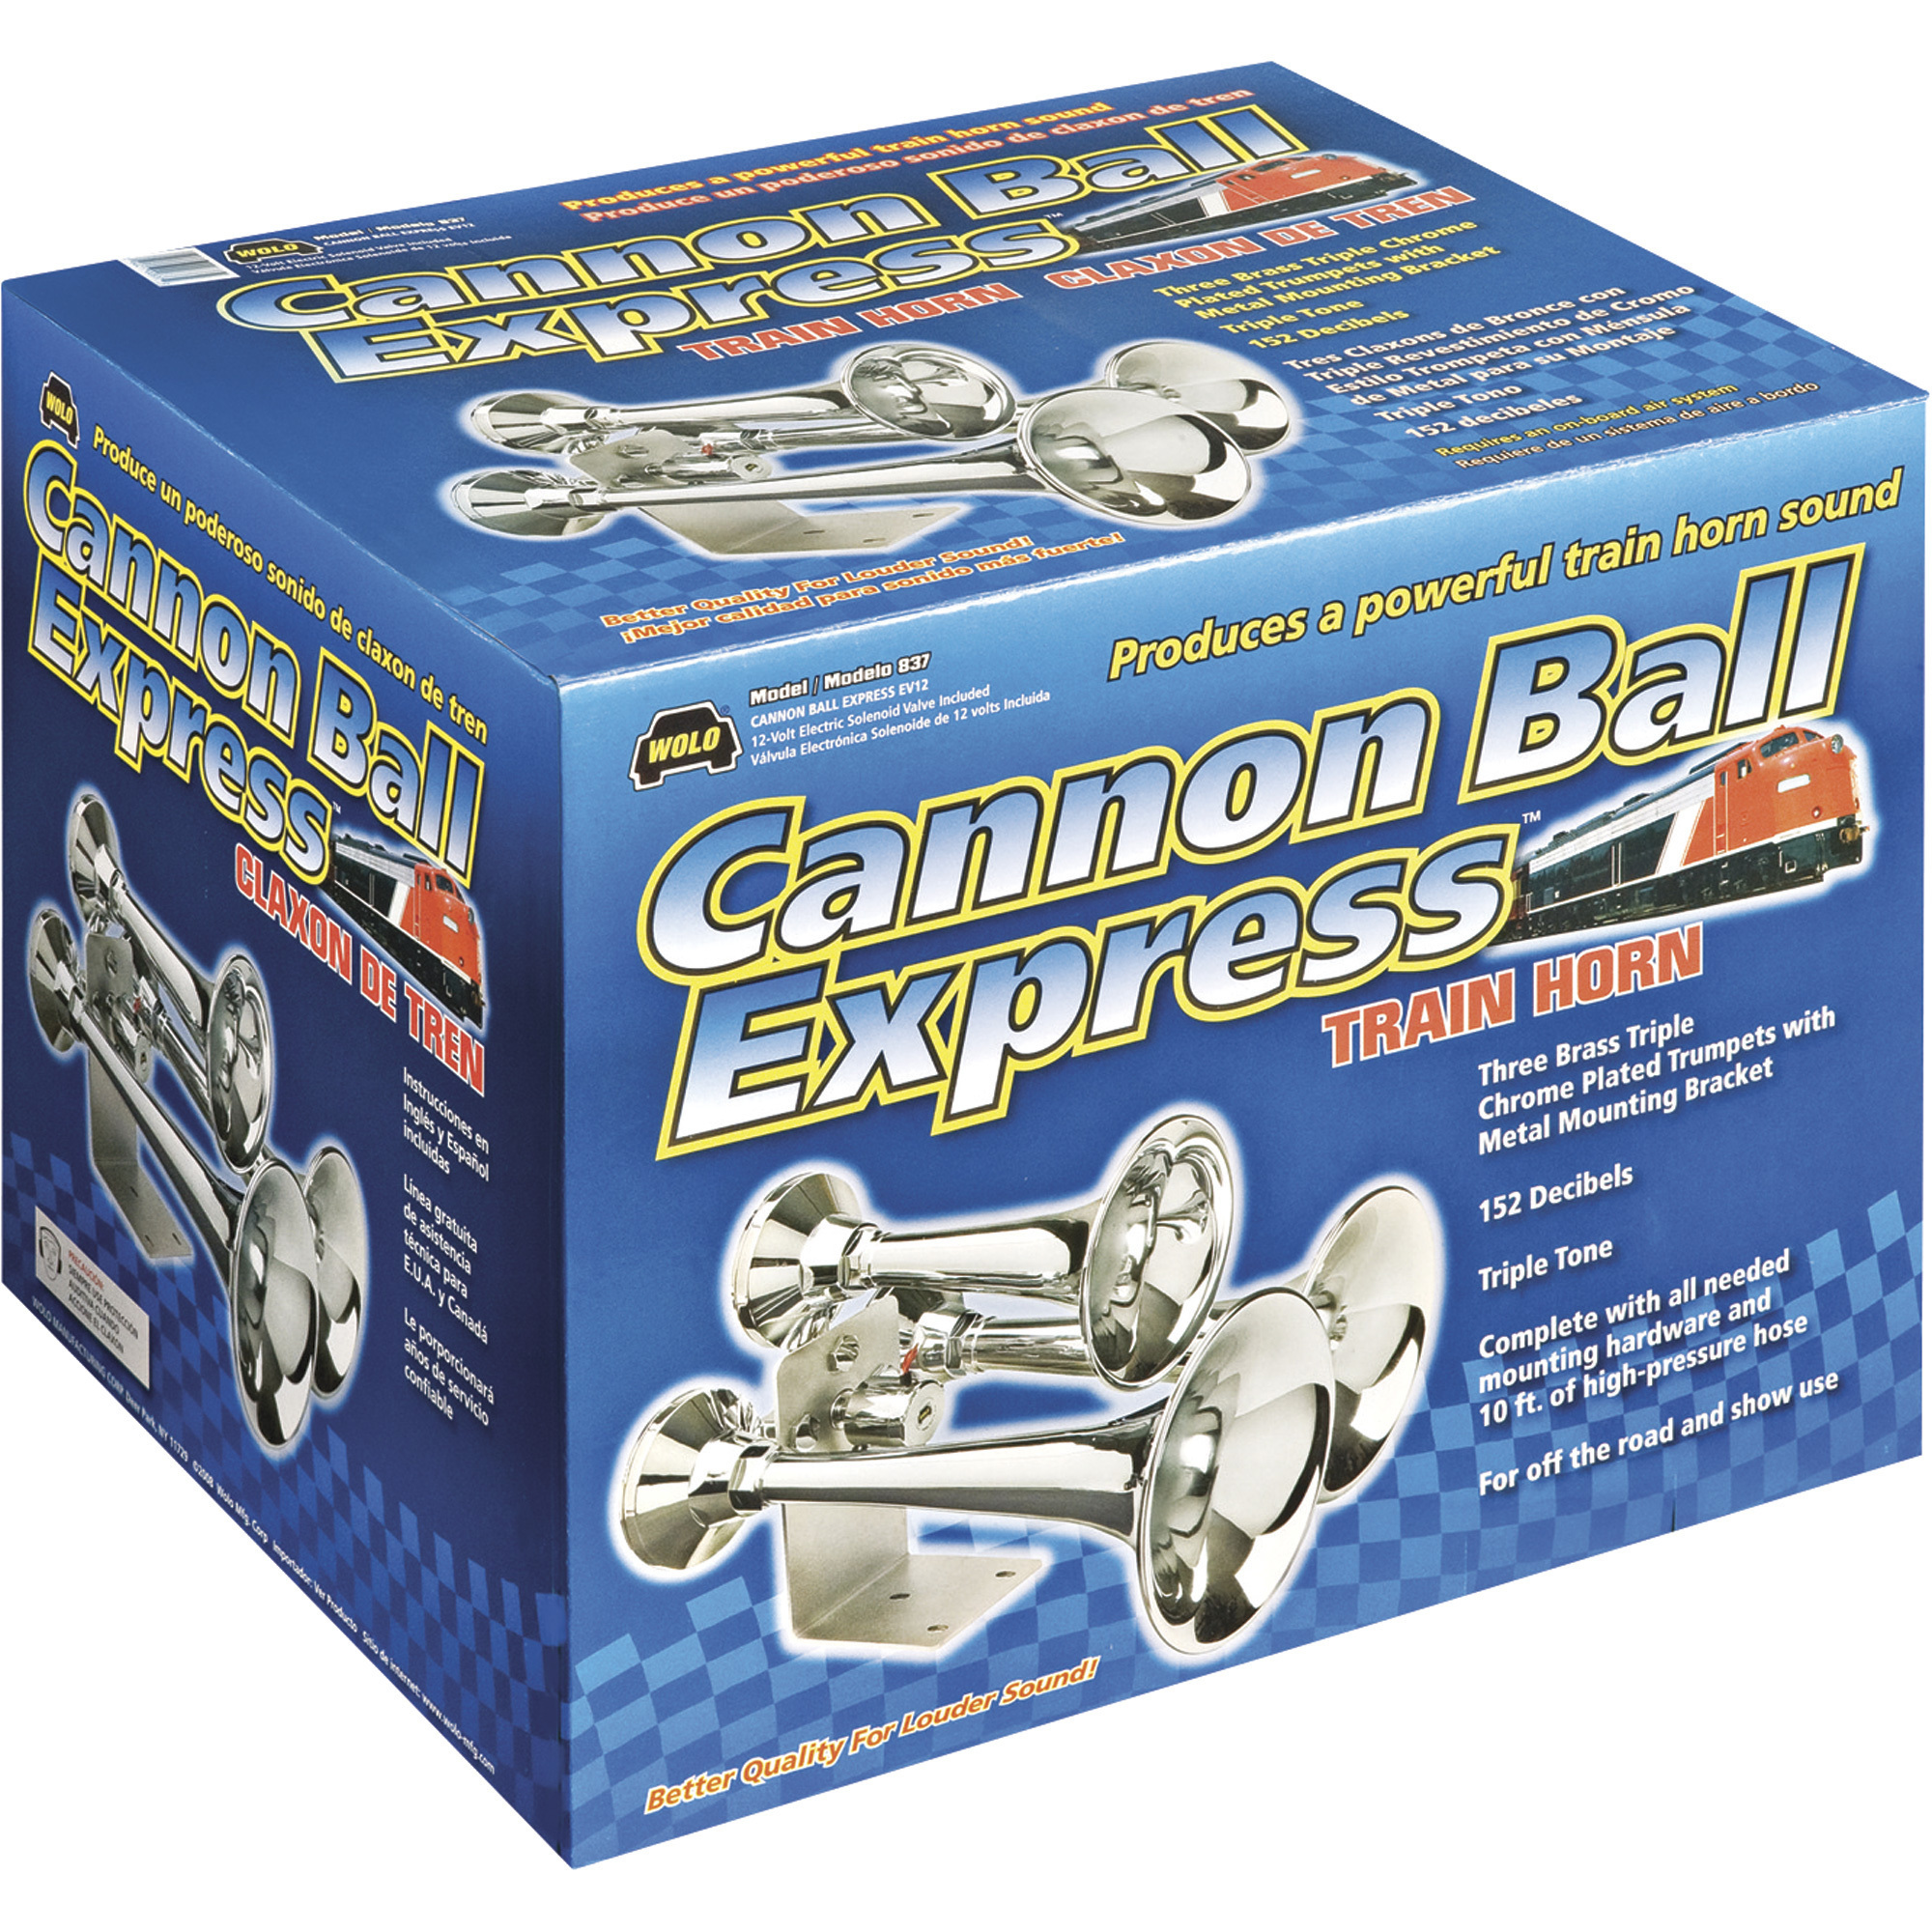 Wolo Cannon Ball Express EV24 Air Horn — 152db Sound Output, Model# 838